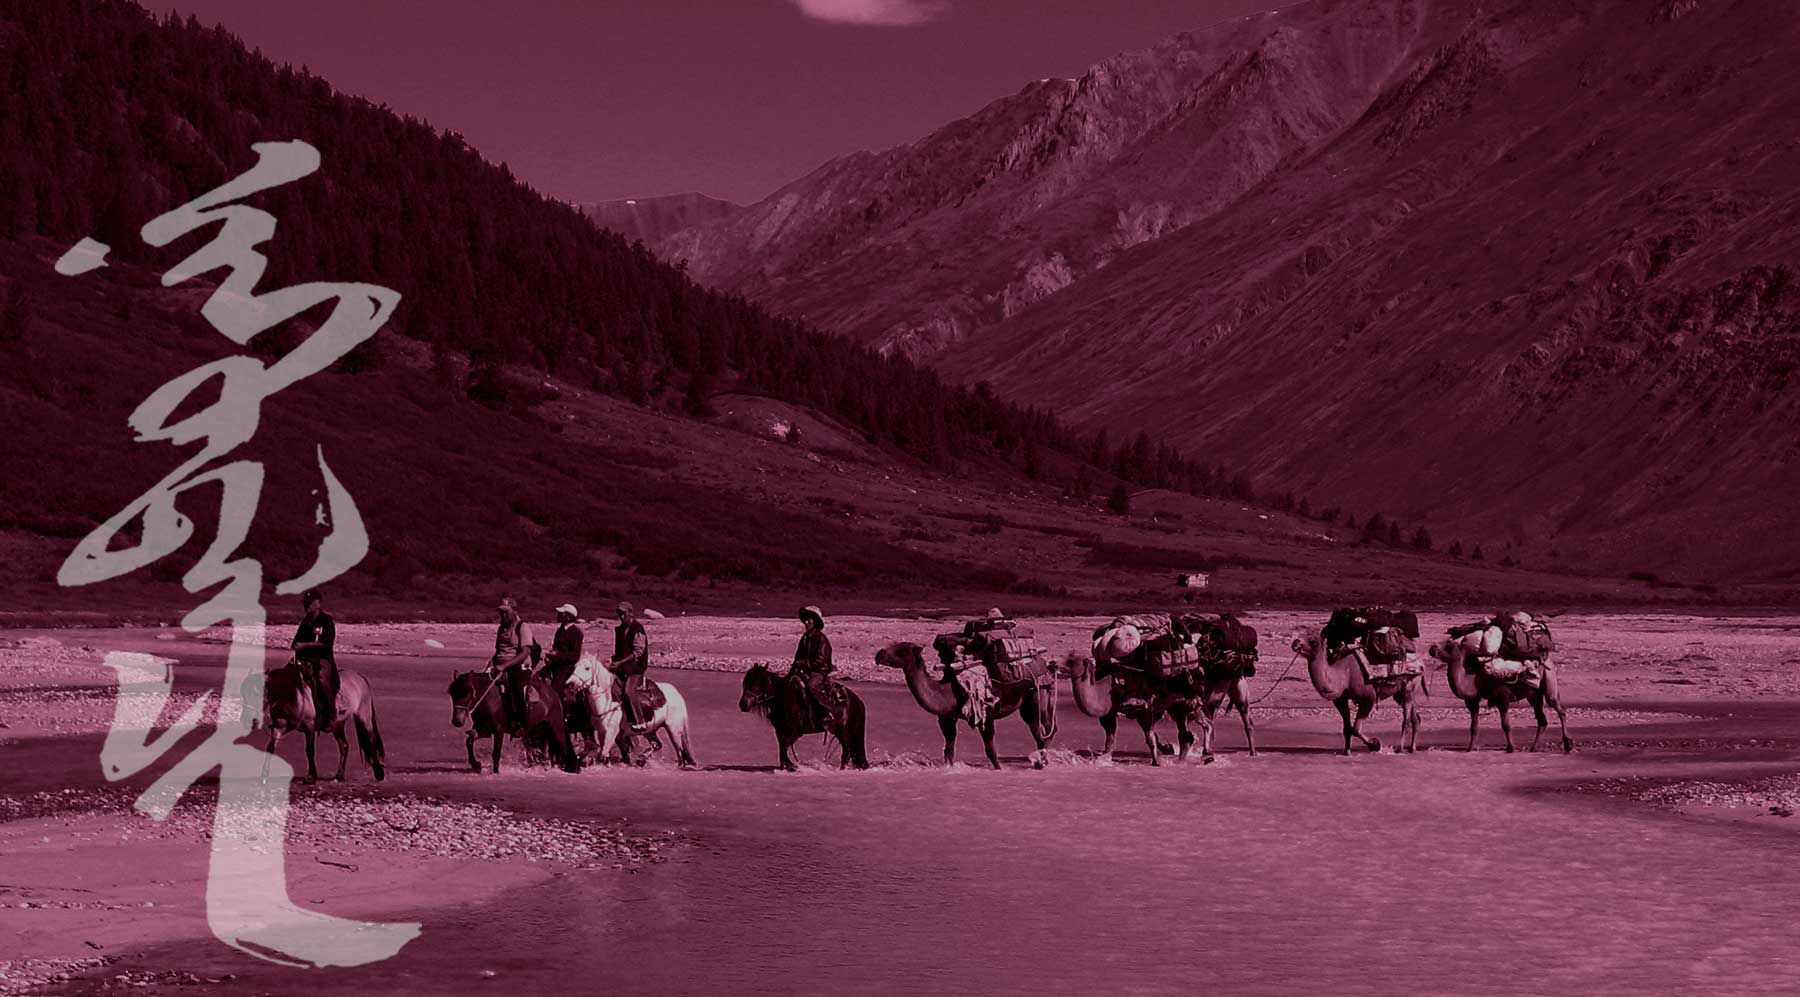 MONGOLIA TRAVEL PHOTOS - Western Mongolia Horse Riding - Altai Kings - Mongolia Nomads Tours